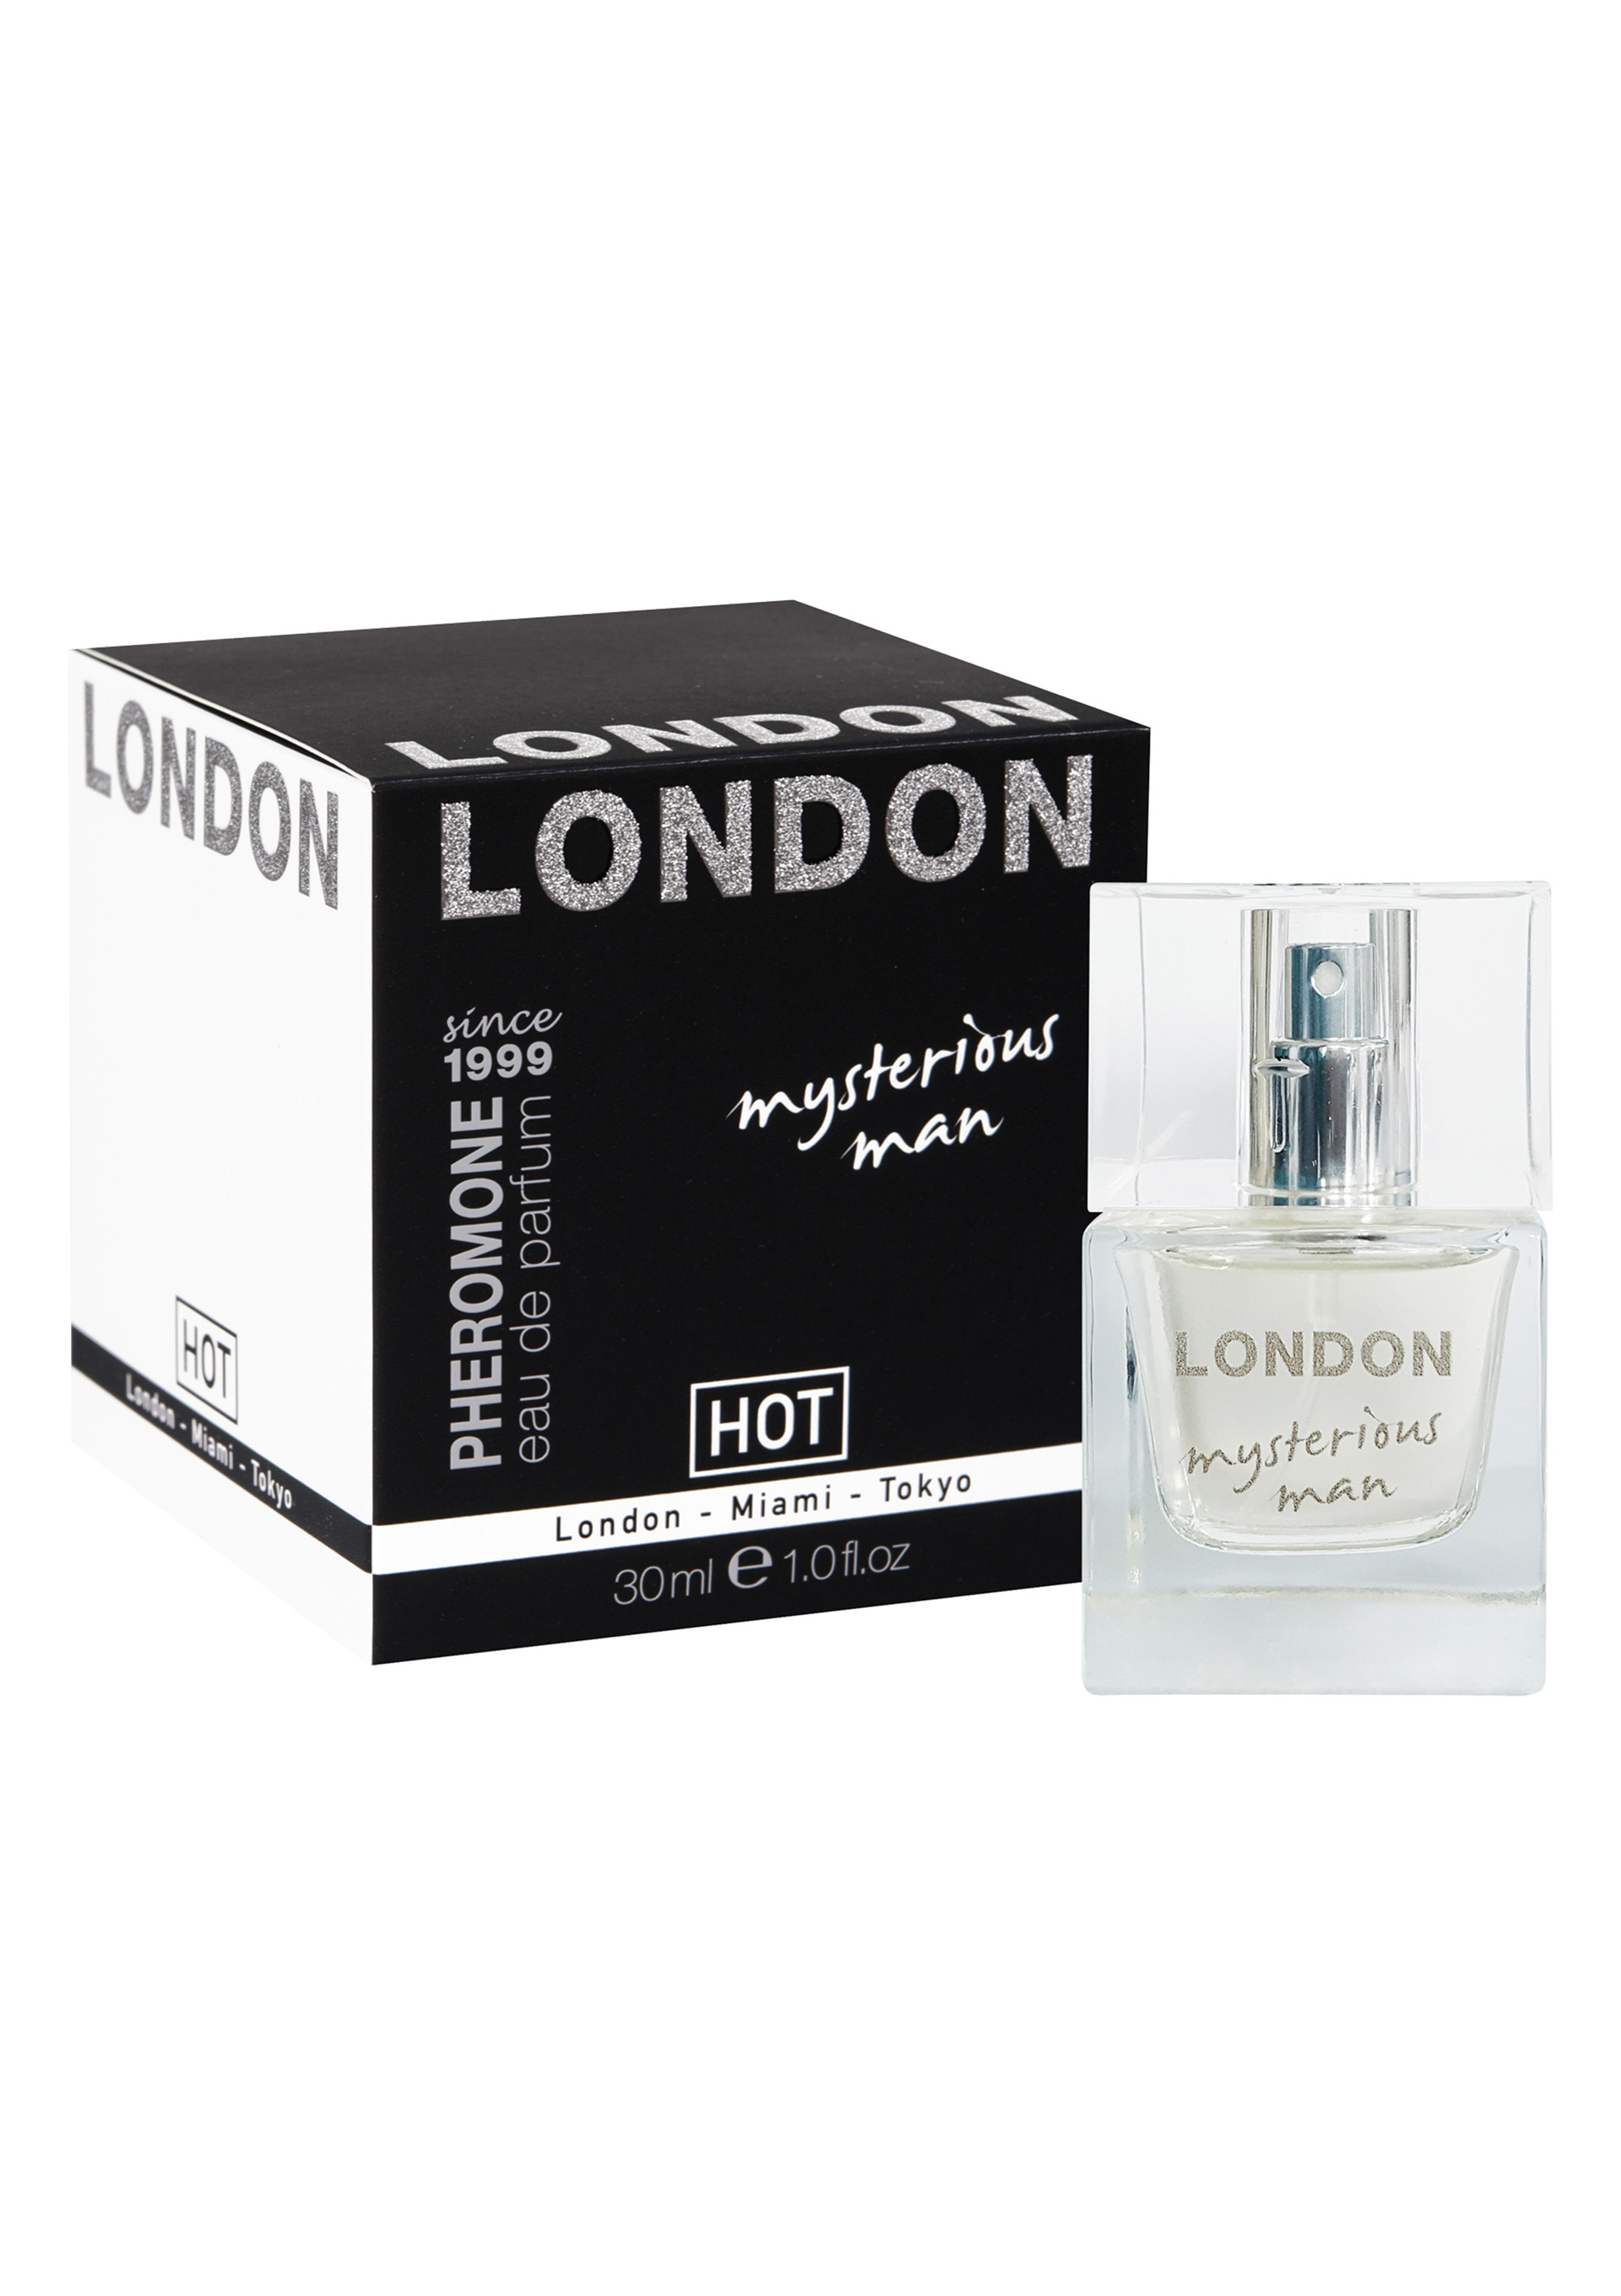 HOT Pheromon Parfum LONDON mysterious man.